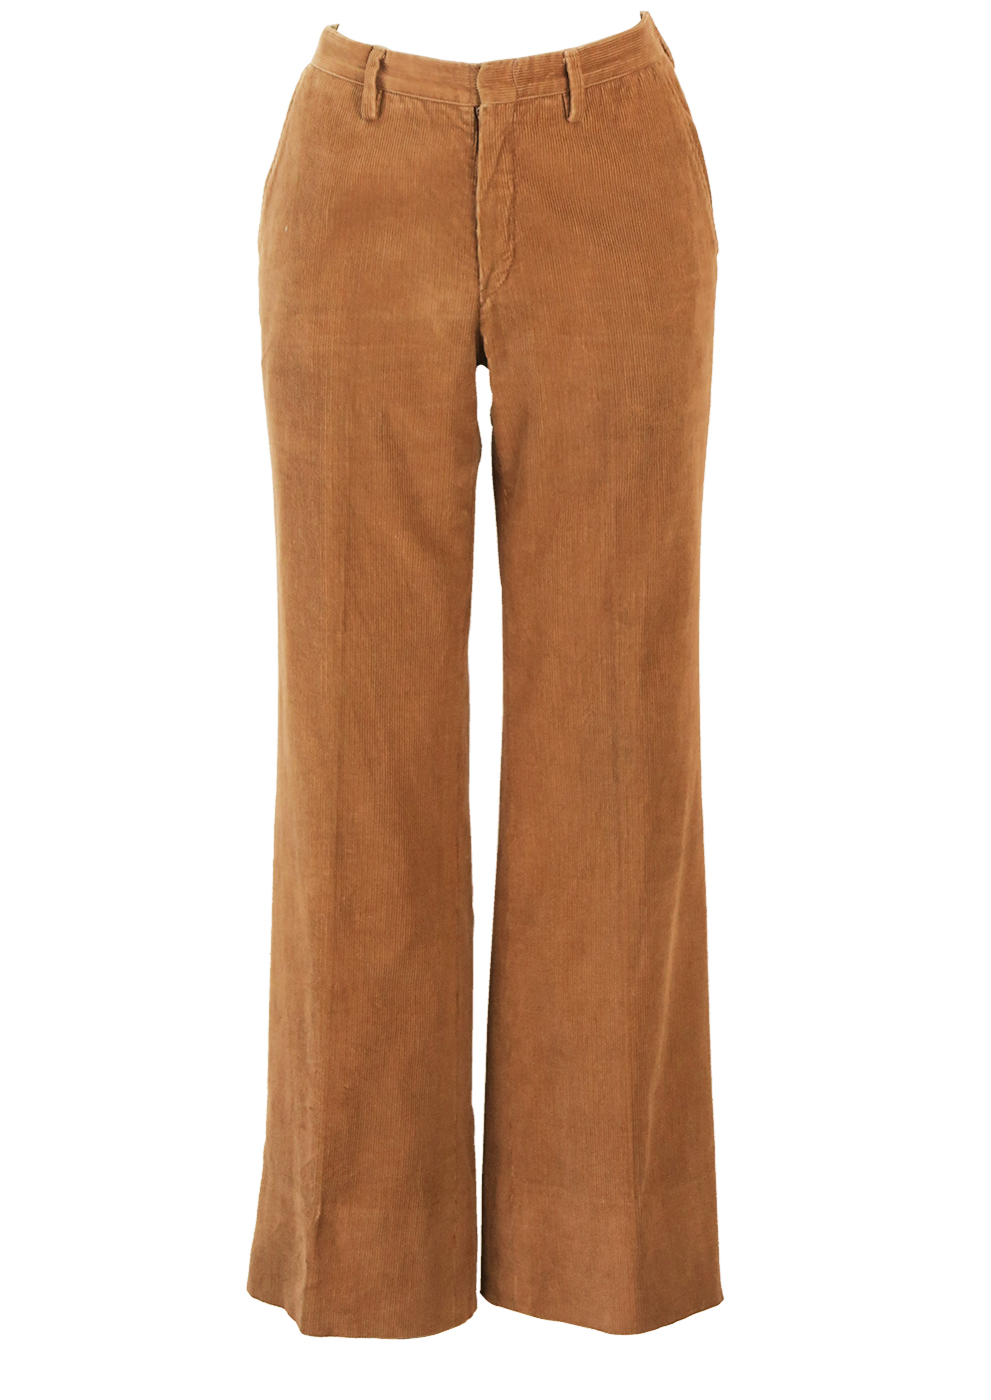 Vintage 70's Flared Camel Coloured Corduroy Trousers - S | Reign Vintage